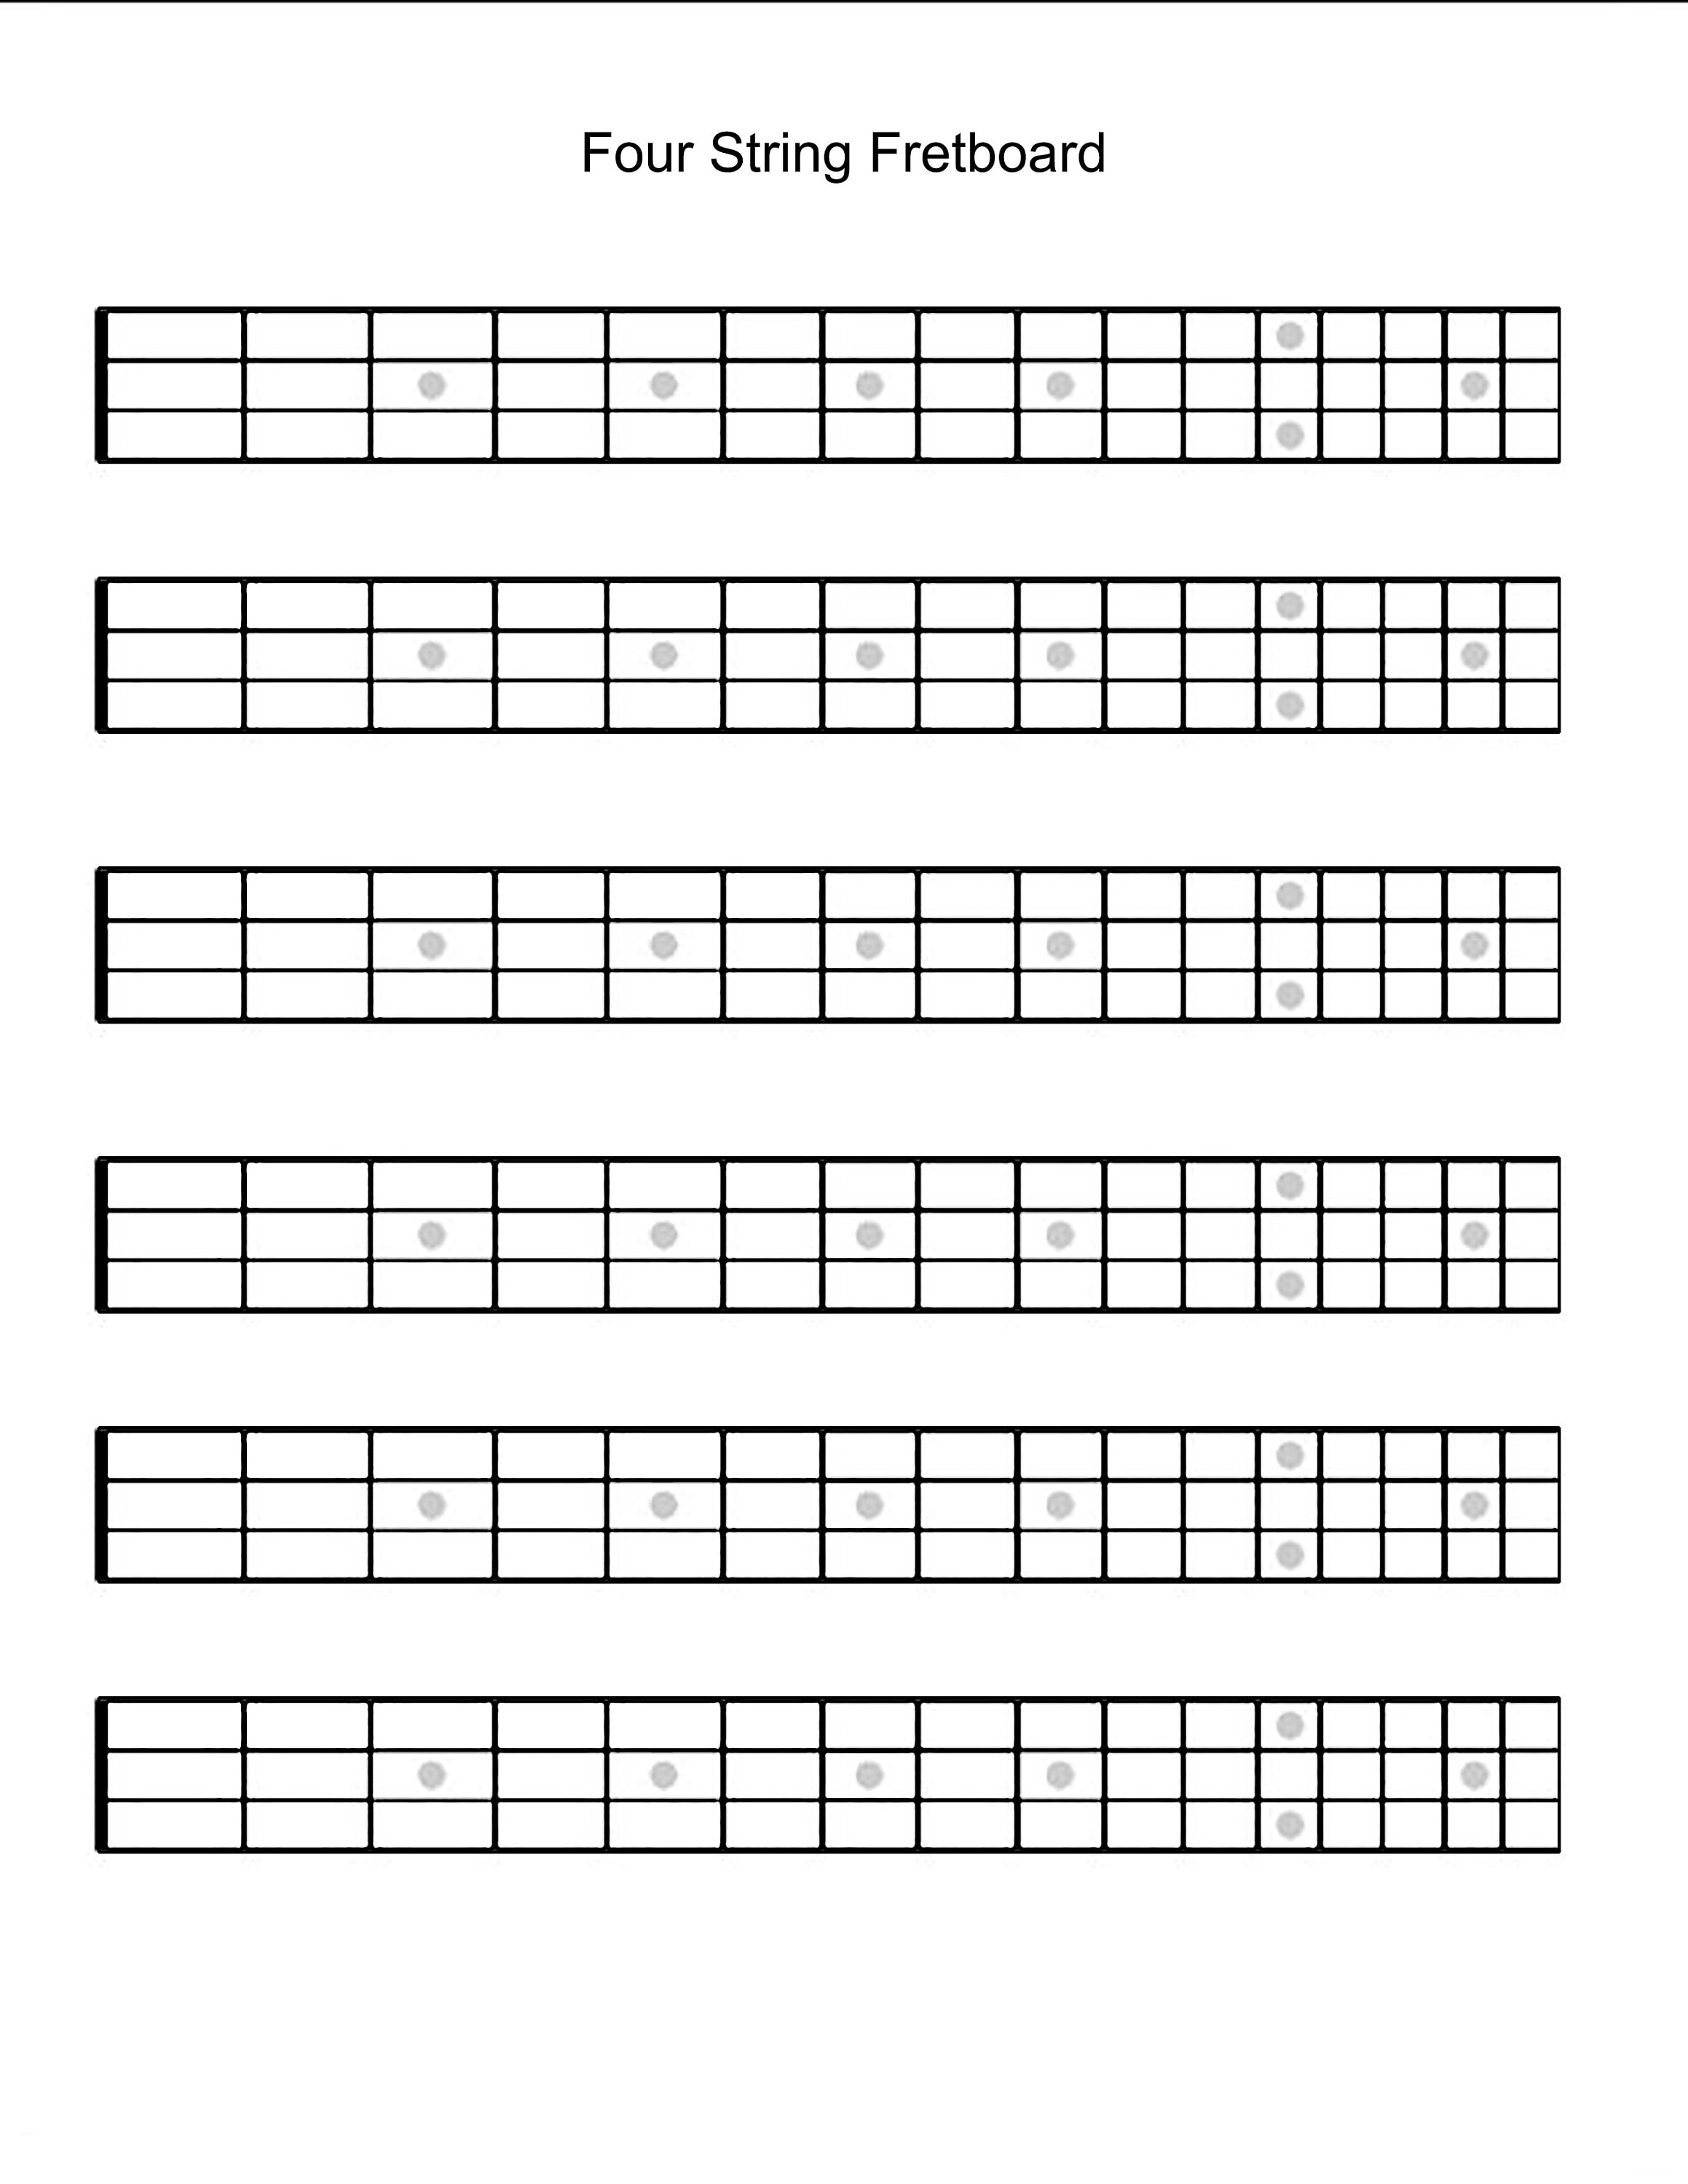 Aspirar Usual candidato Diagrama de tabla de diapasón en blanco de guitarra imprimible - Etsy España